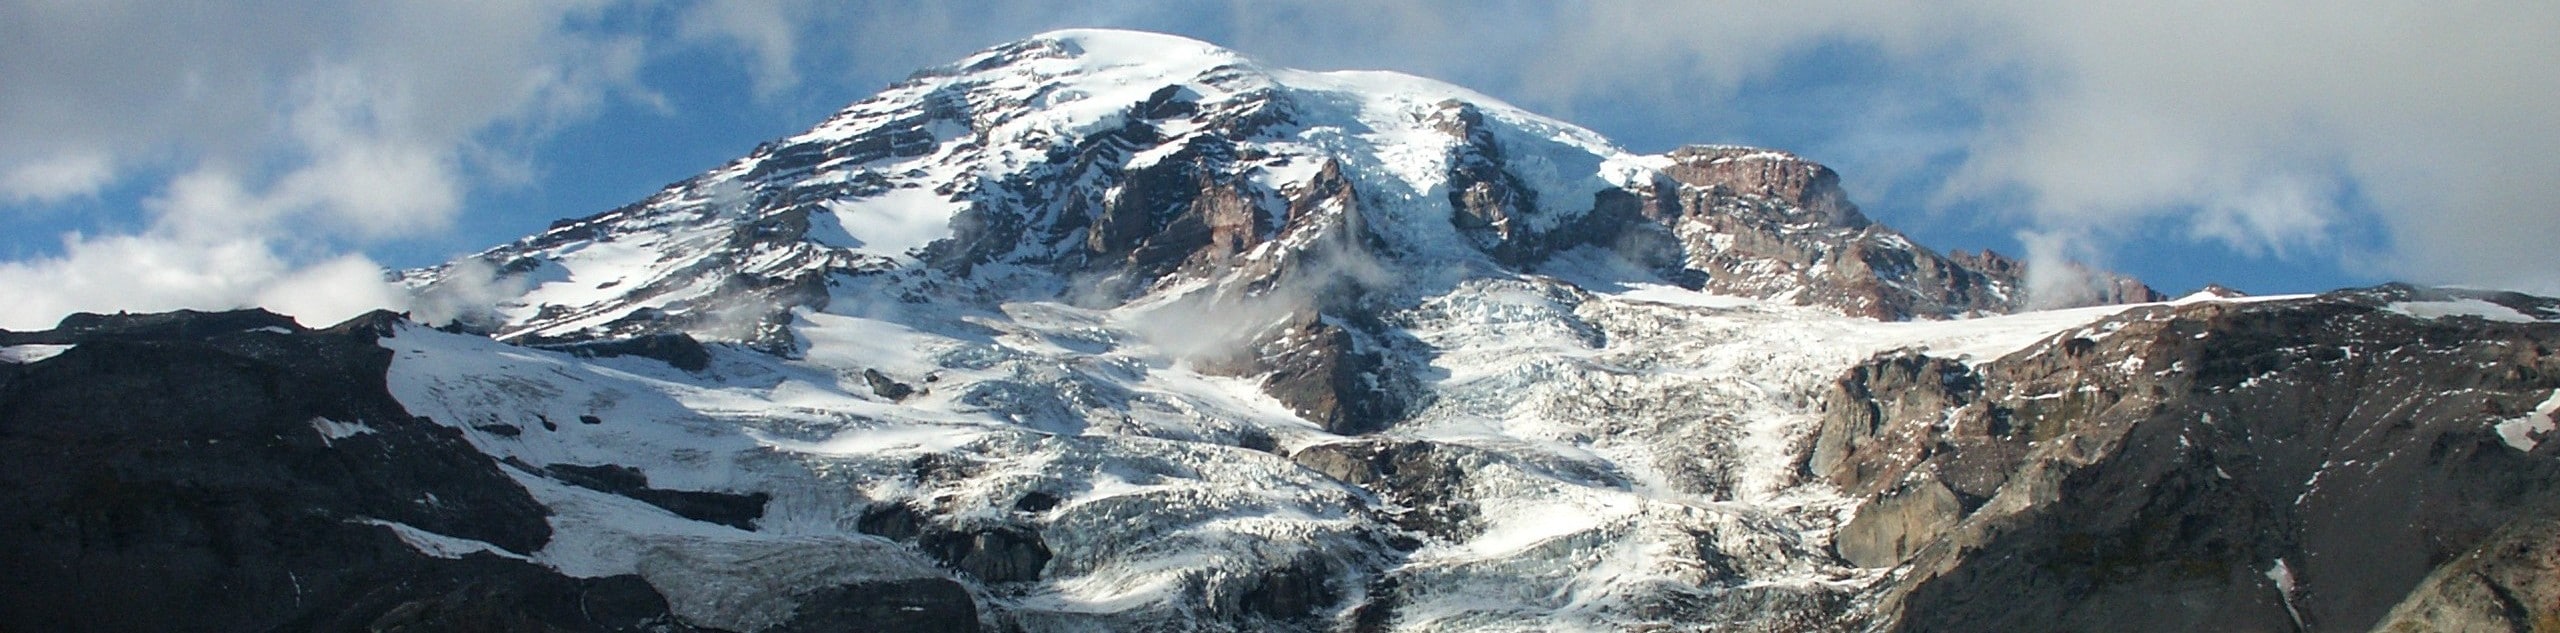 Glacier Vista Trail